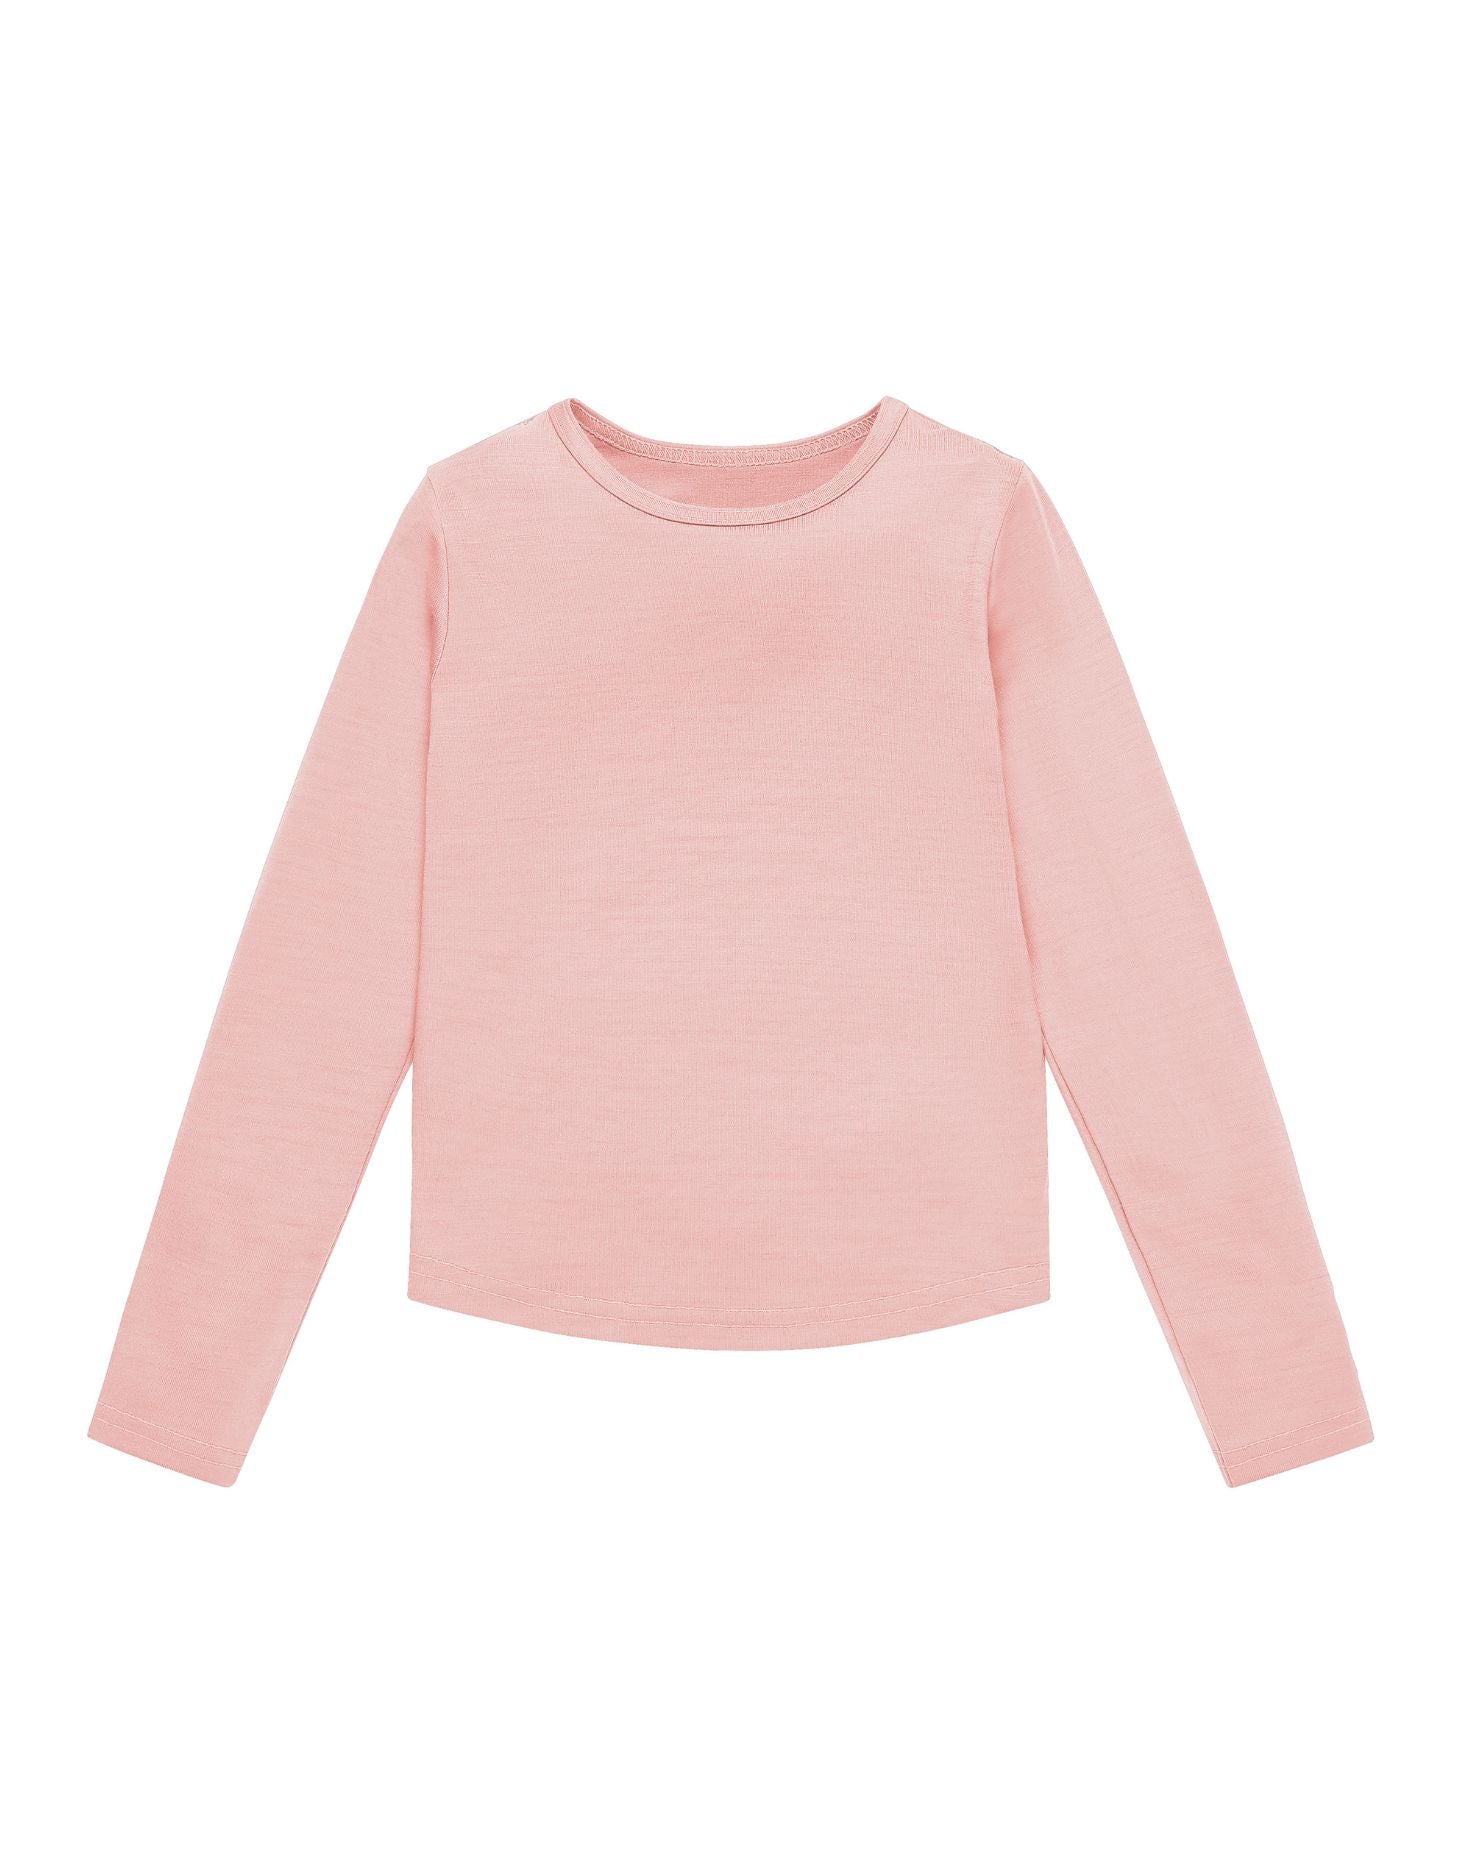 Merino Long Sleeve, Pink Peach Blossom - SmallsLong Sleeve Top